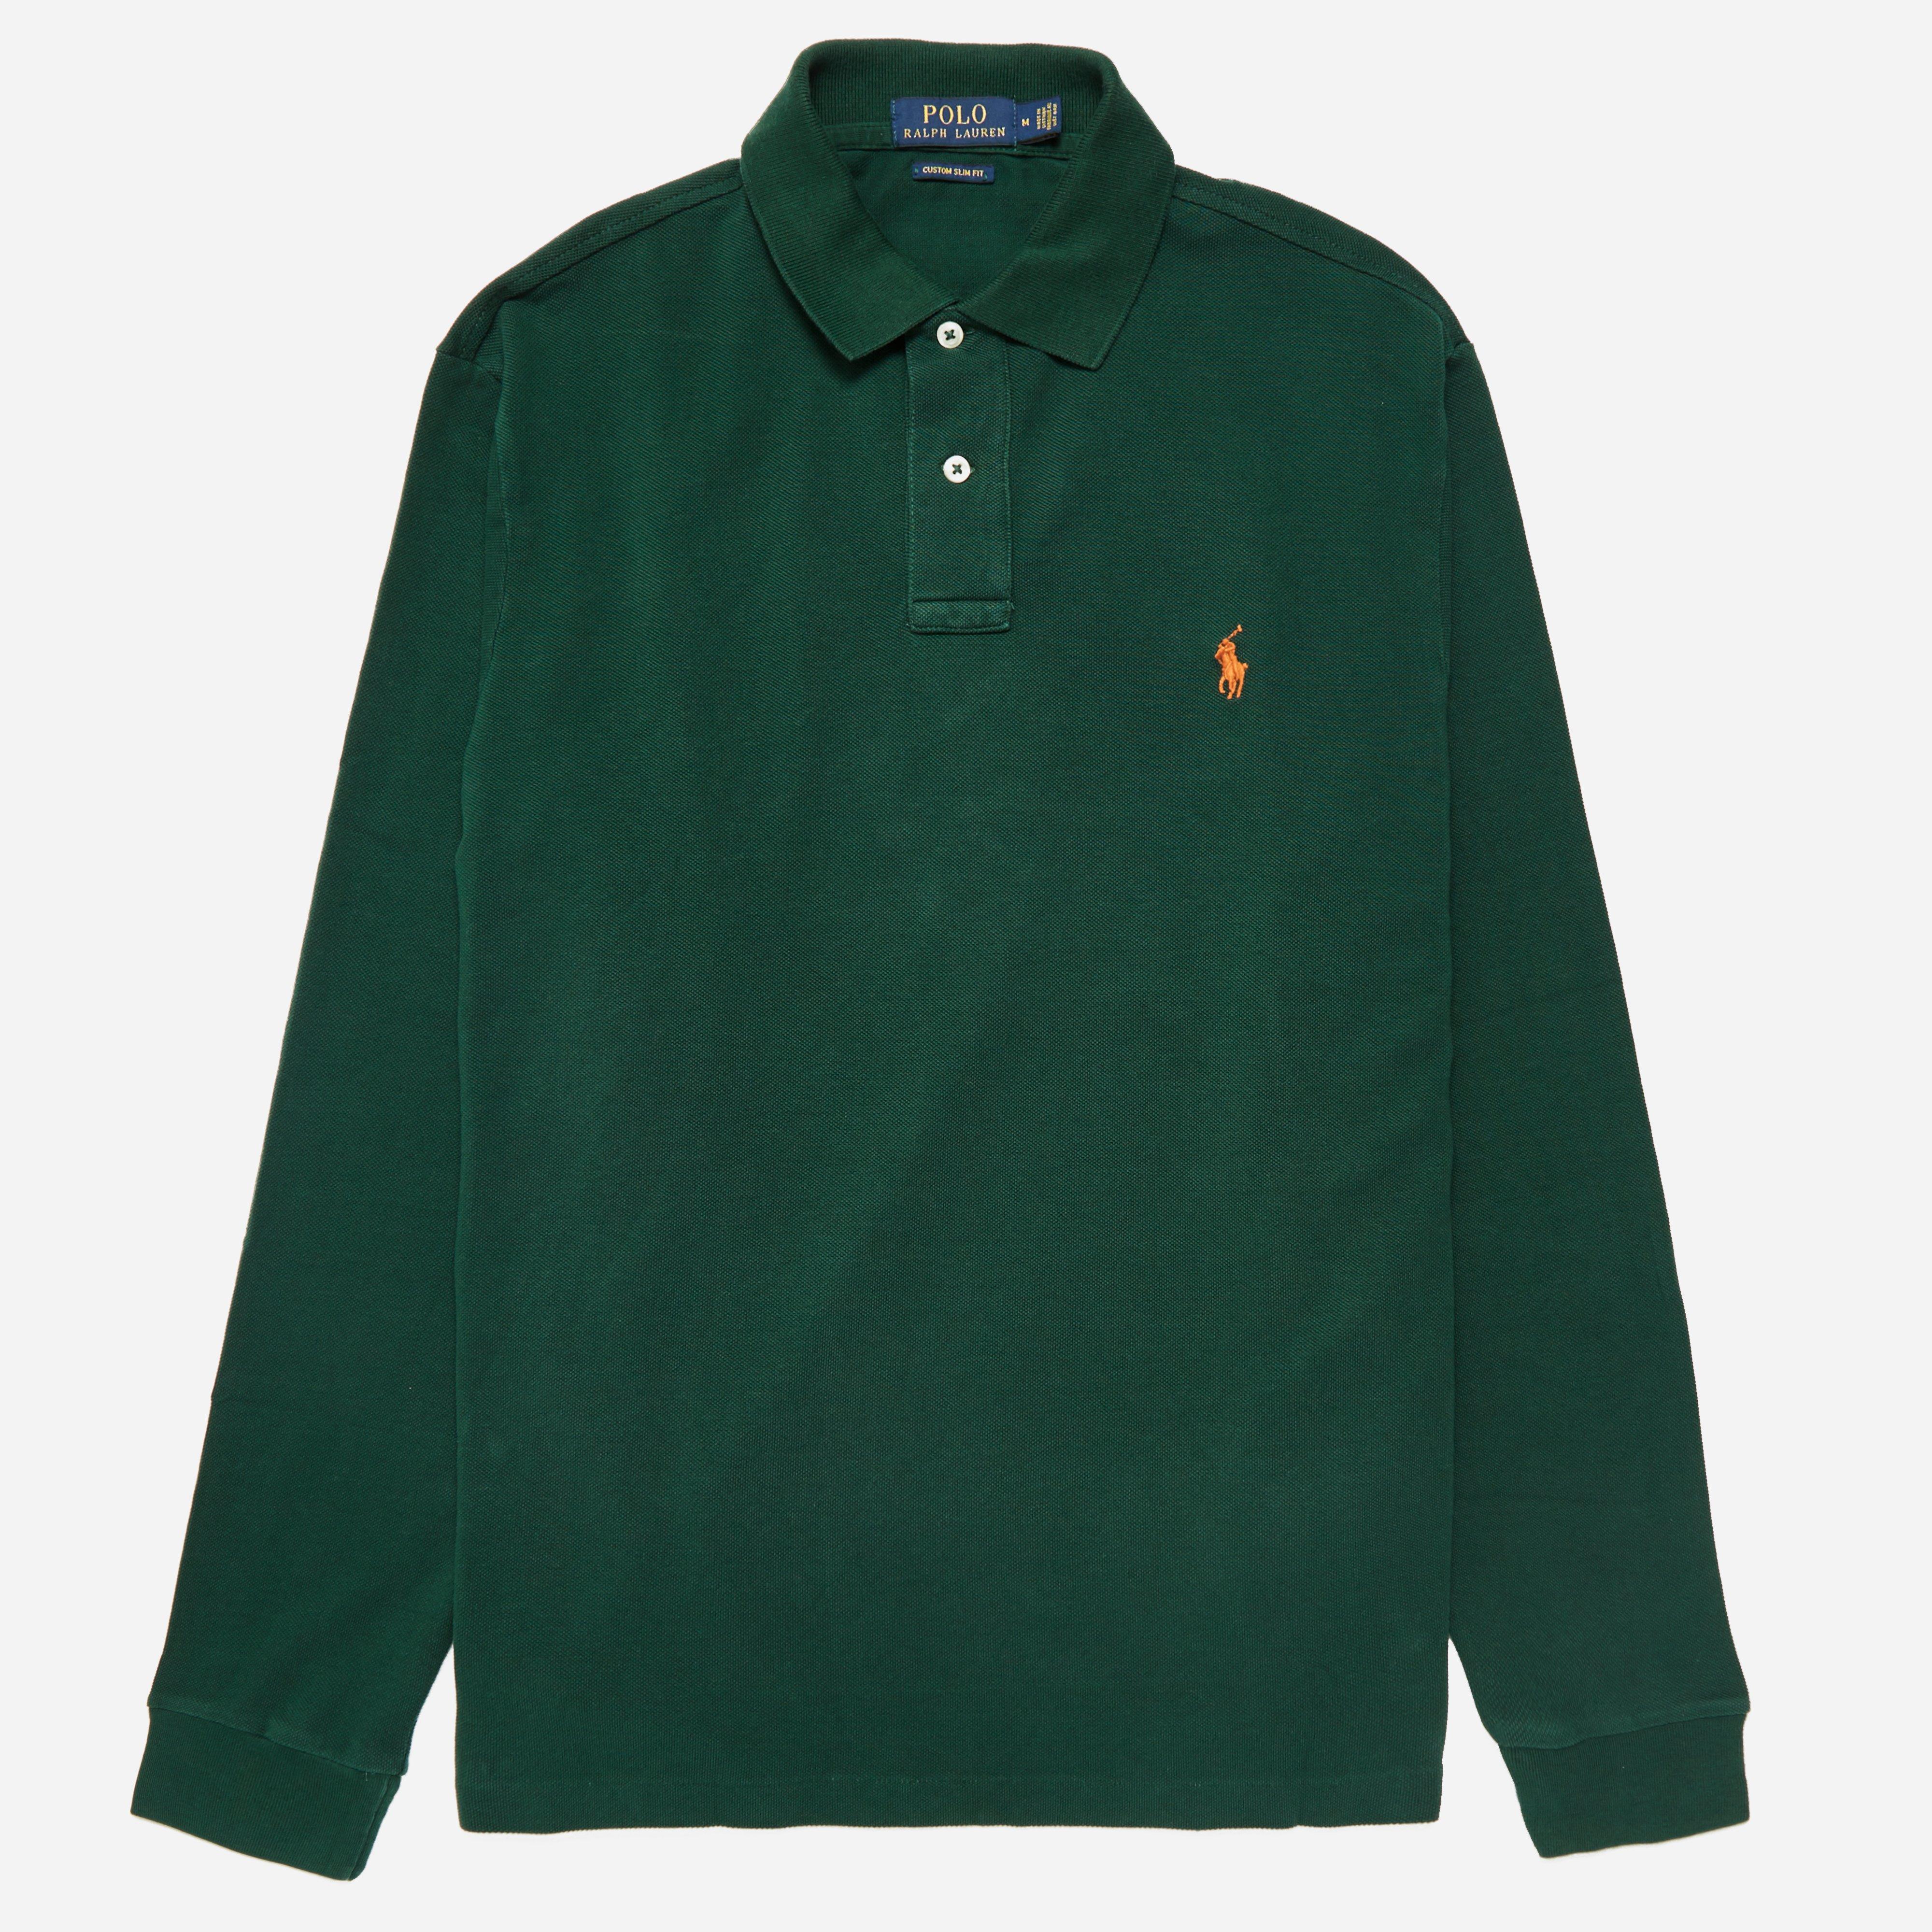 Polo Ralph Lauren Long Sleeve Polo Shirt in Green for Men - Lyst